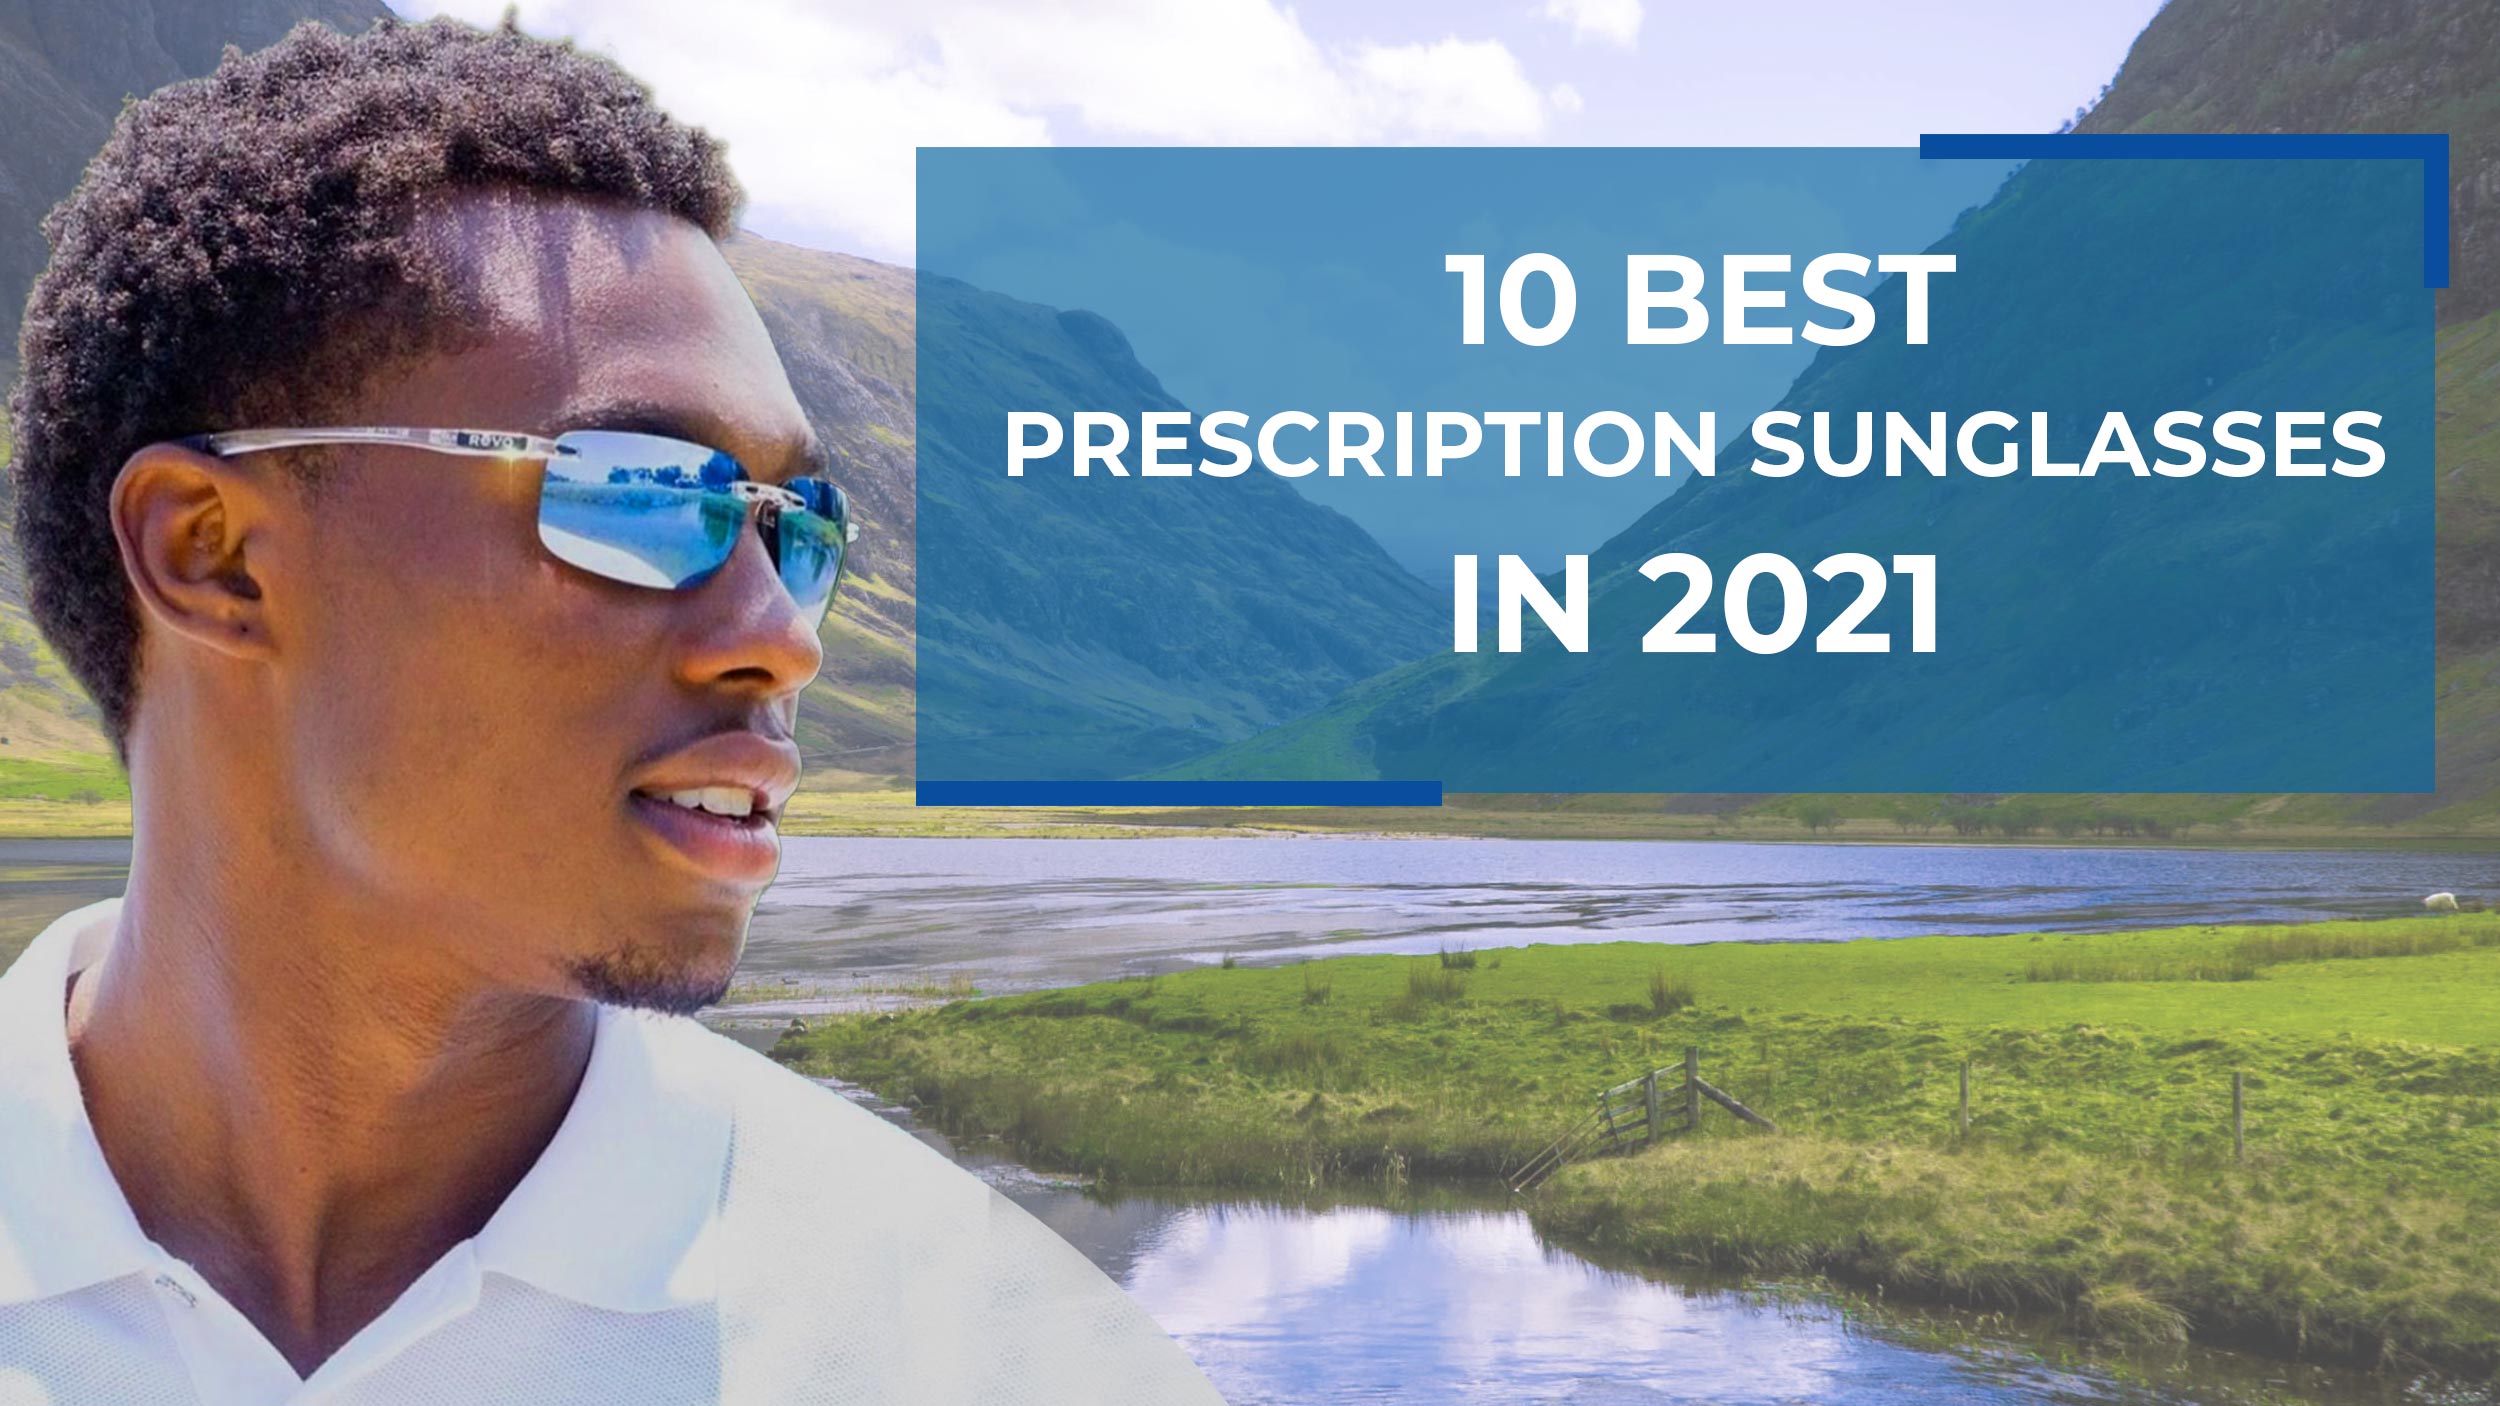 10 Best Prescription Sunglasses From 2021 Header